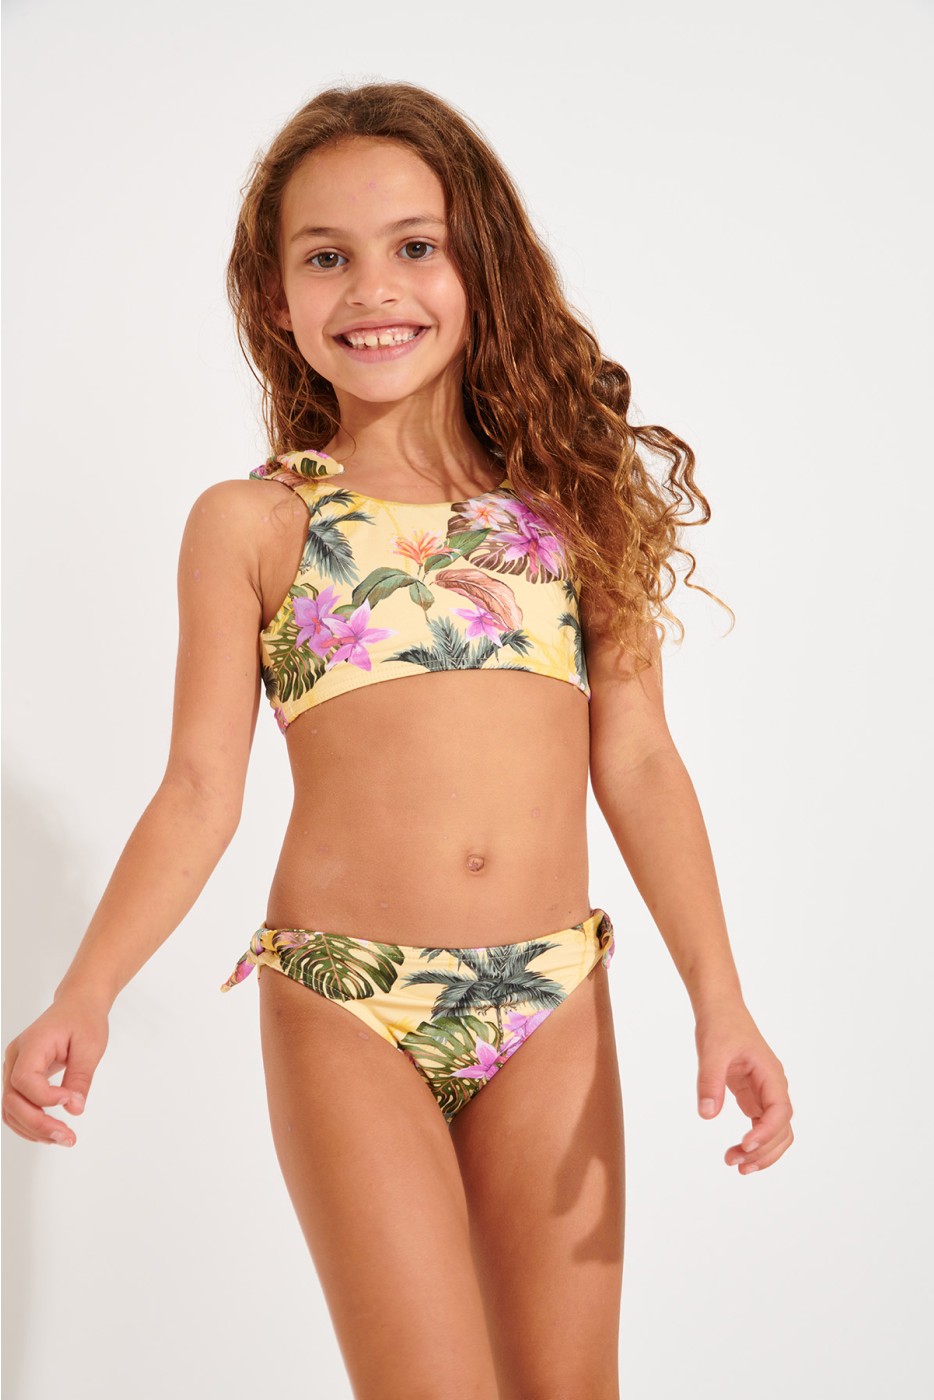 Enfant Filles 3 Pièces Ensemble Bikini Tankini Imprimé Tropical